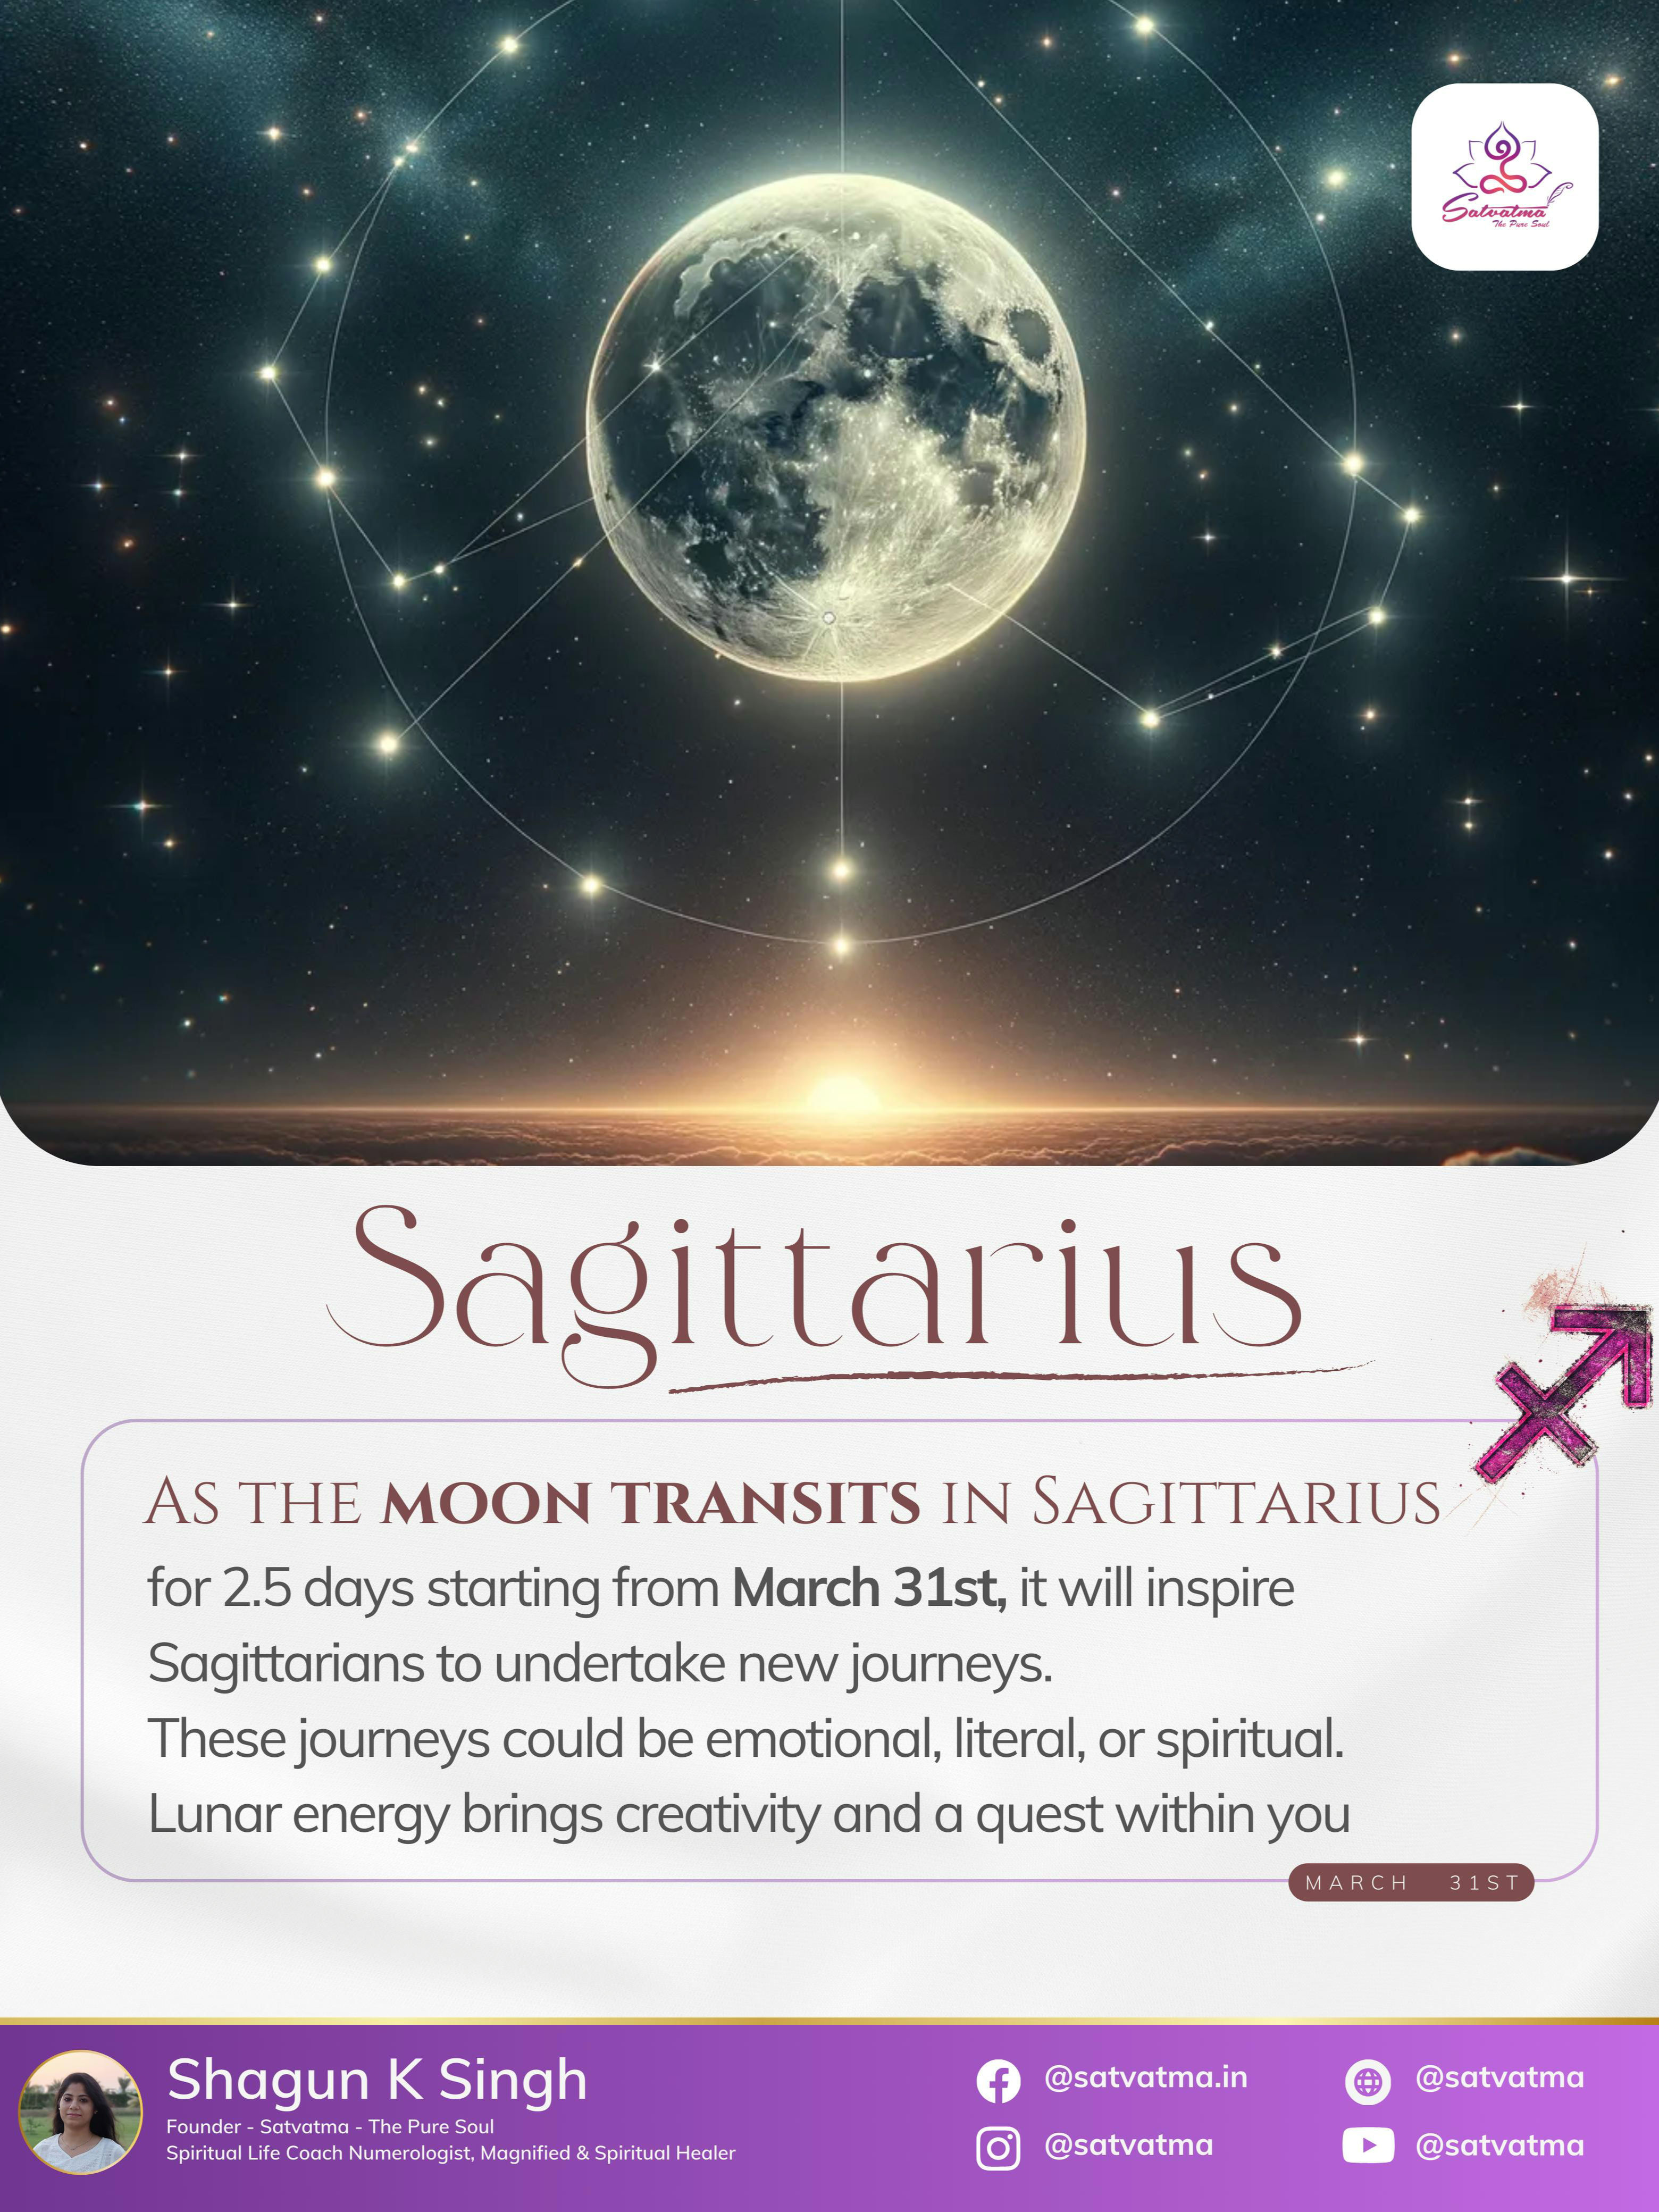 How the transit of Moon into Sagittarius sign brings energy for Saggis...

Love & Light 
Shagun K Singh
Satvatma-The Pure Soul
Manifesting Miracles

# # # 